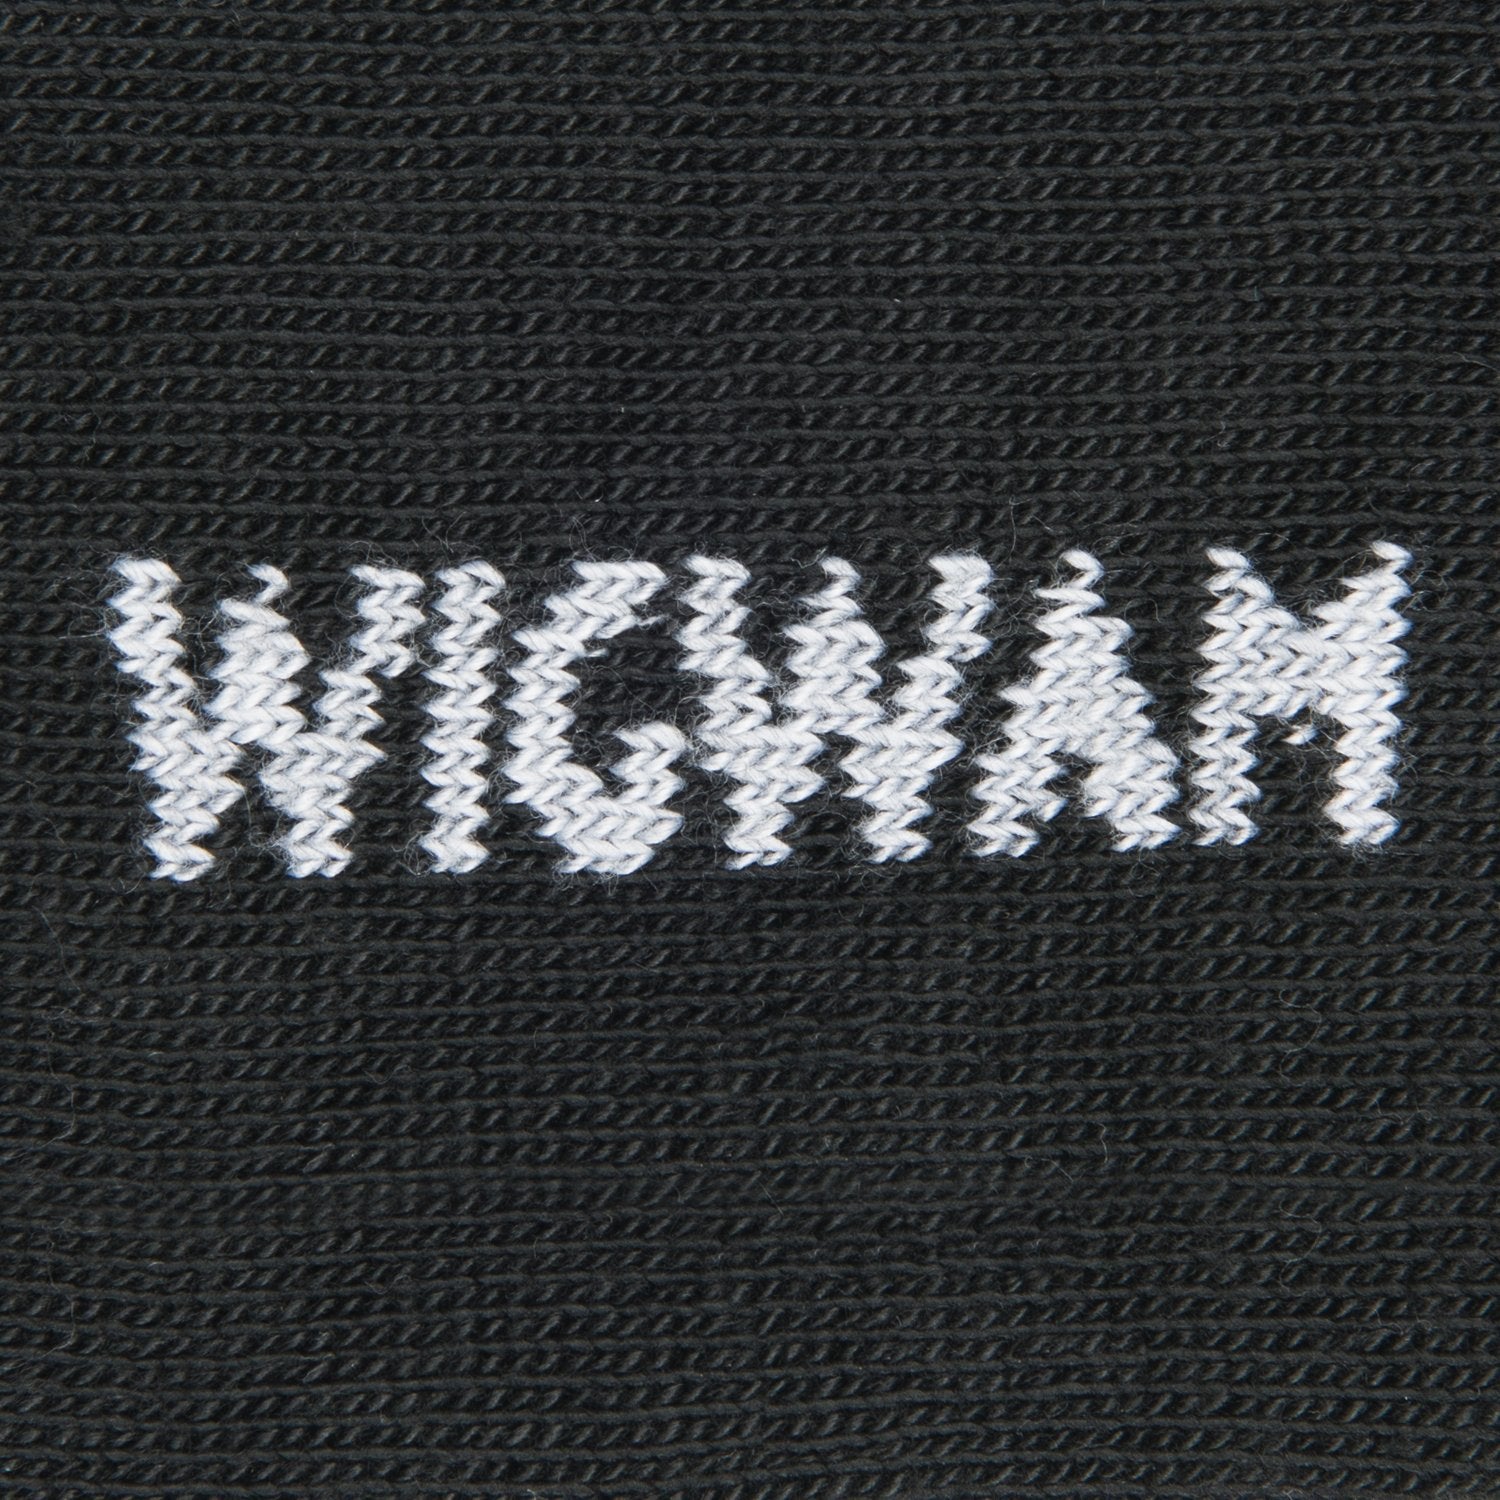 Diabetic Sport Crew Midweight Sock - Black knit-in logo - made in The USA Wigwam Socks